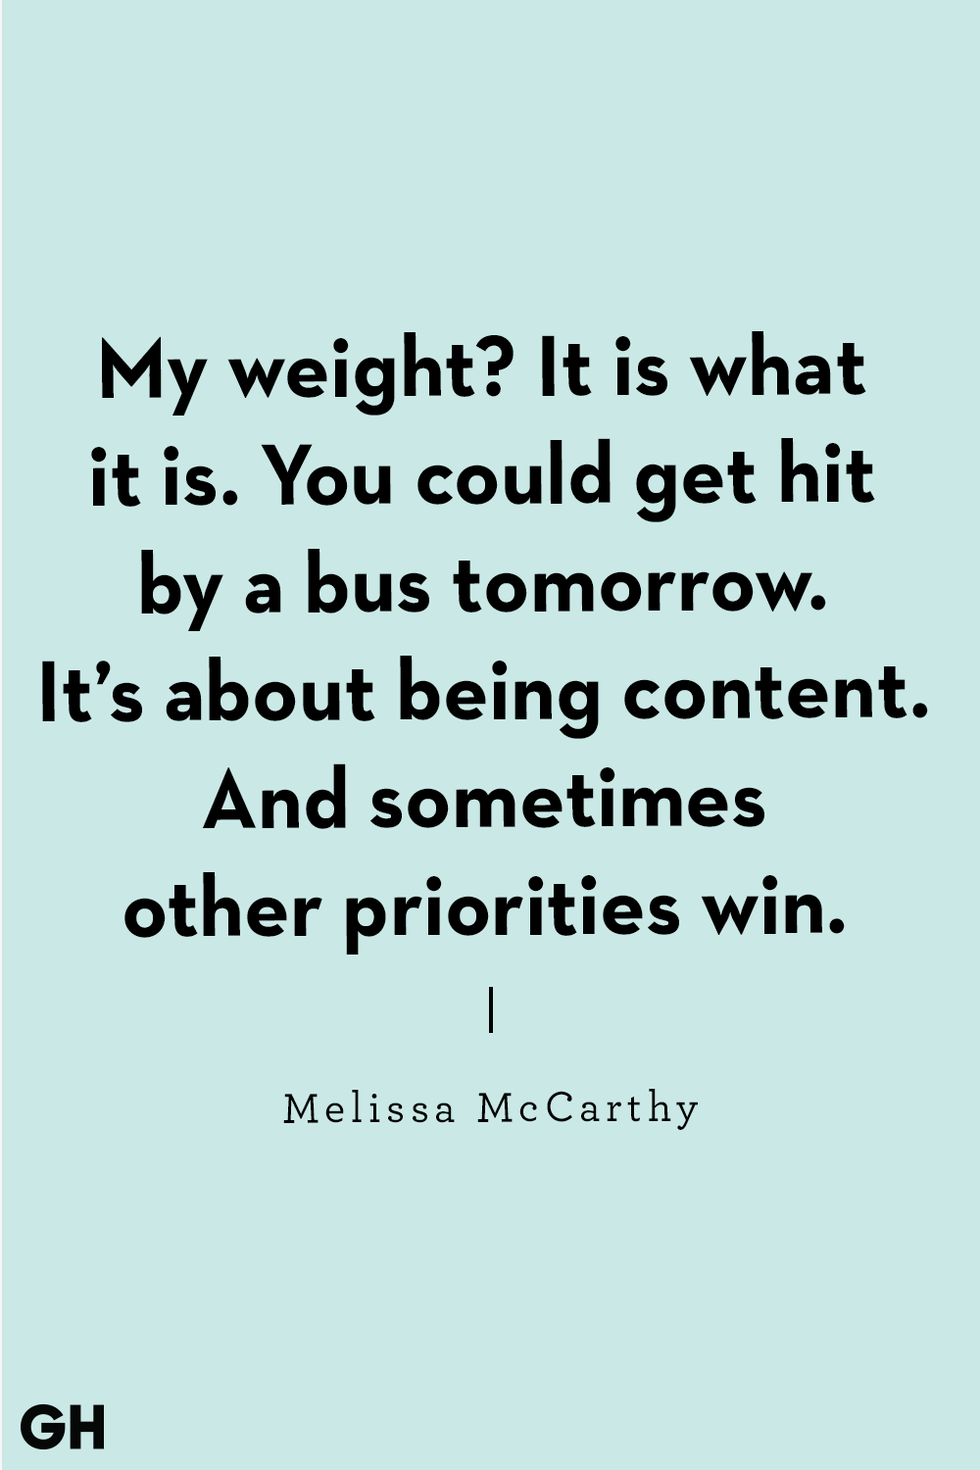 melissa mccarthy body positive quote